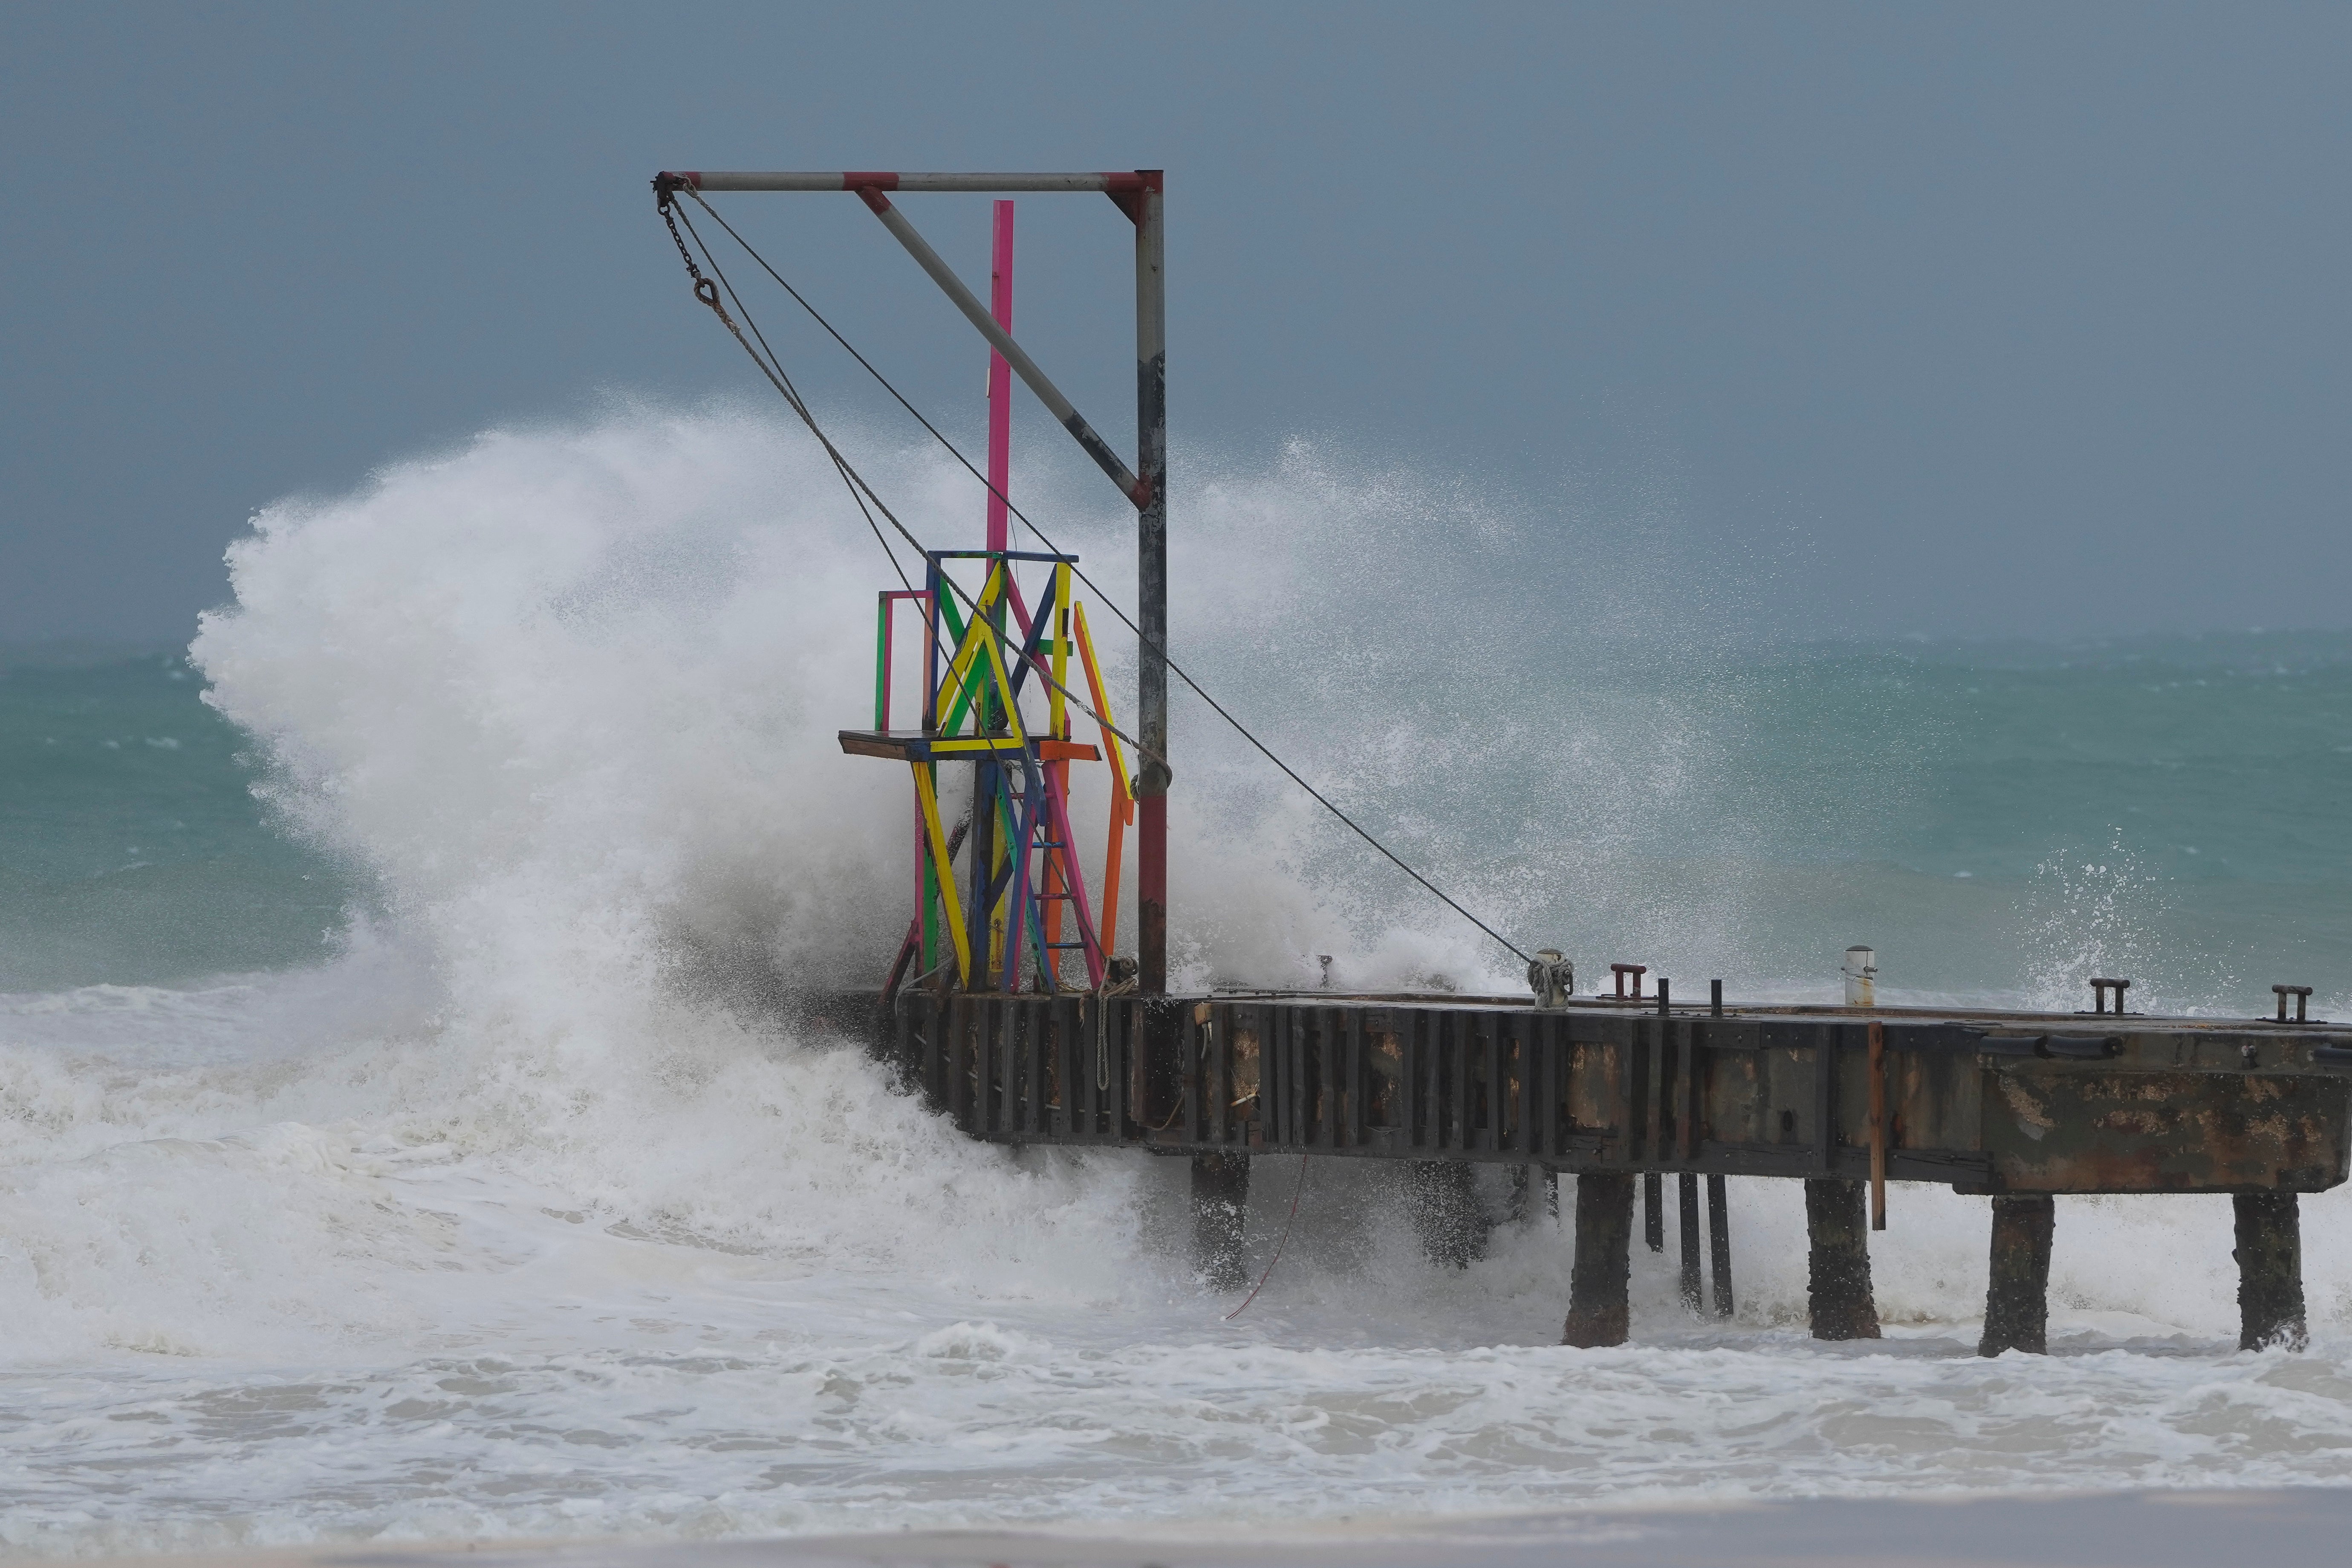 Waves hit a pier in Bridgetown, Barbados, as Hurricane Beryl passed through on Monday.